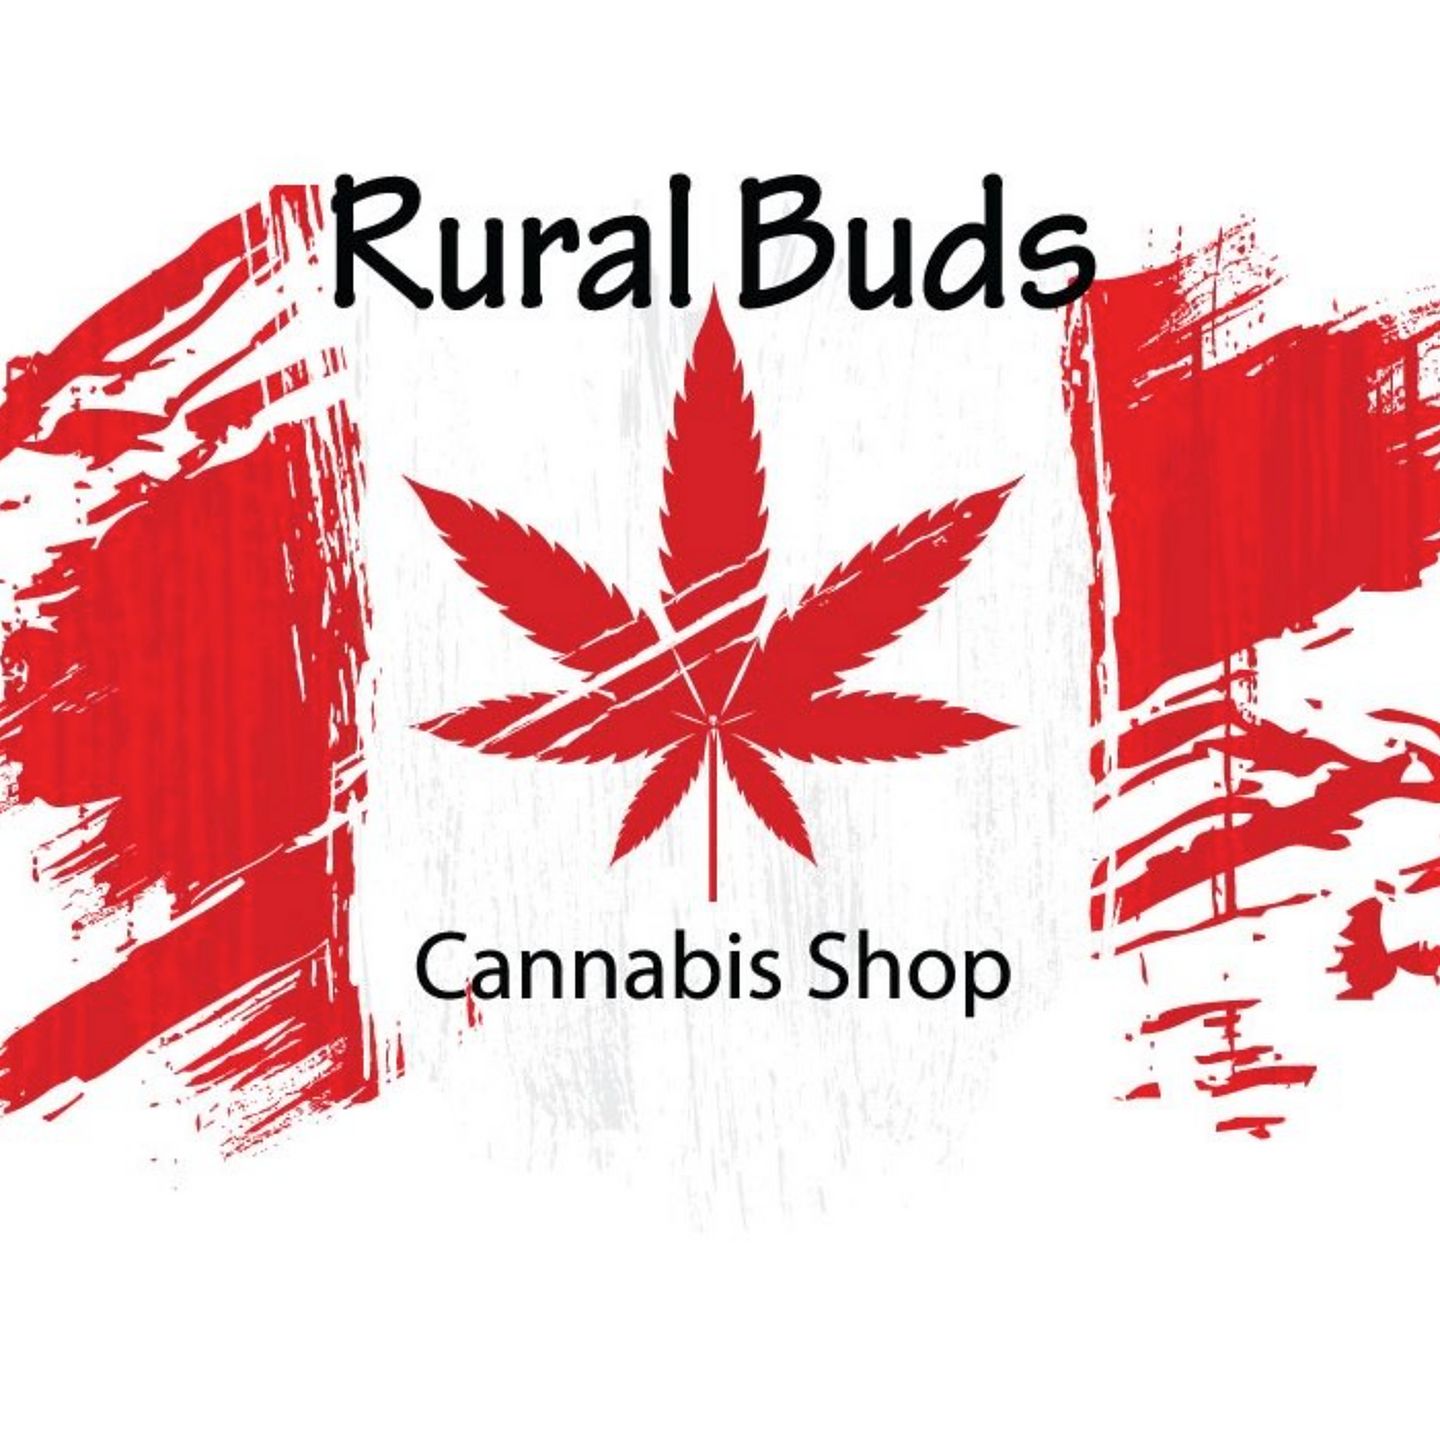 image feature Rural Buds Cannabis Shop - St. Pierre